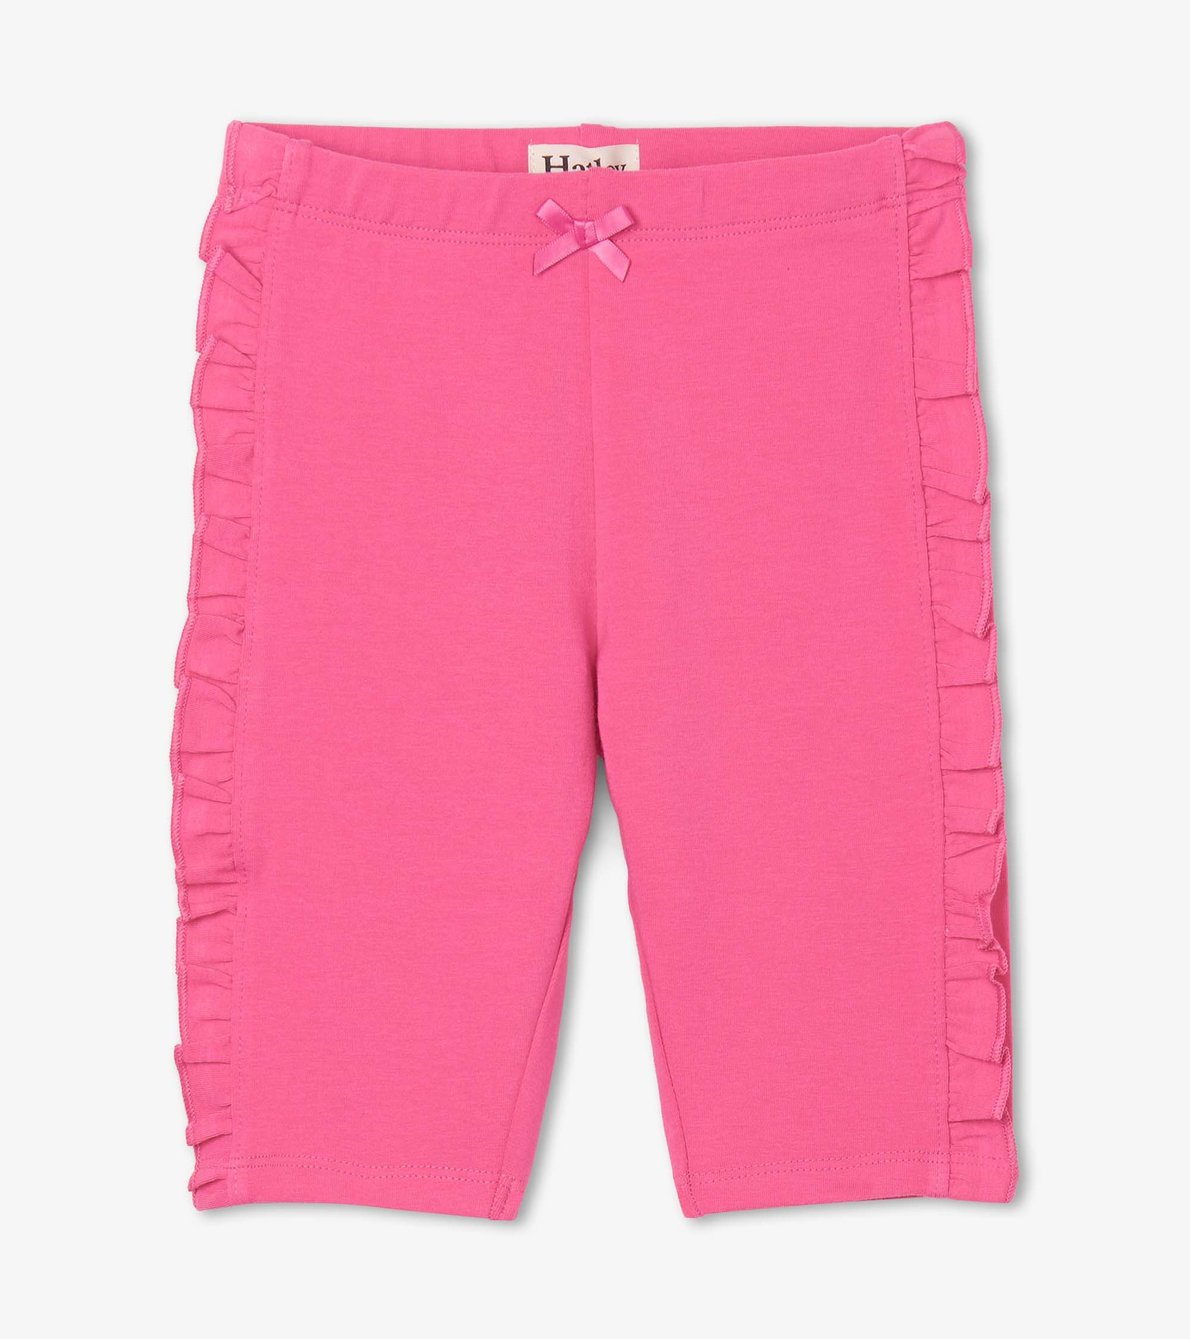 View larger image of Pink Ruffle Bike Shorts